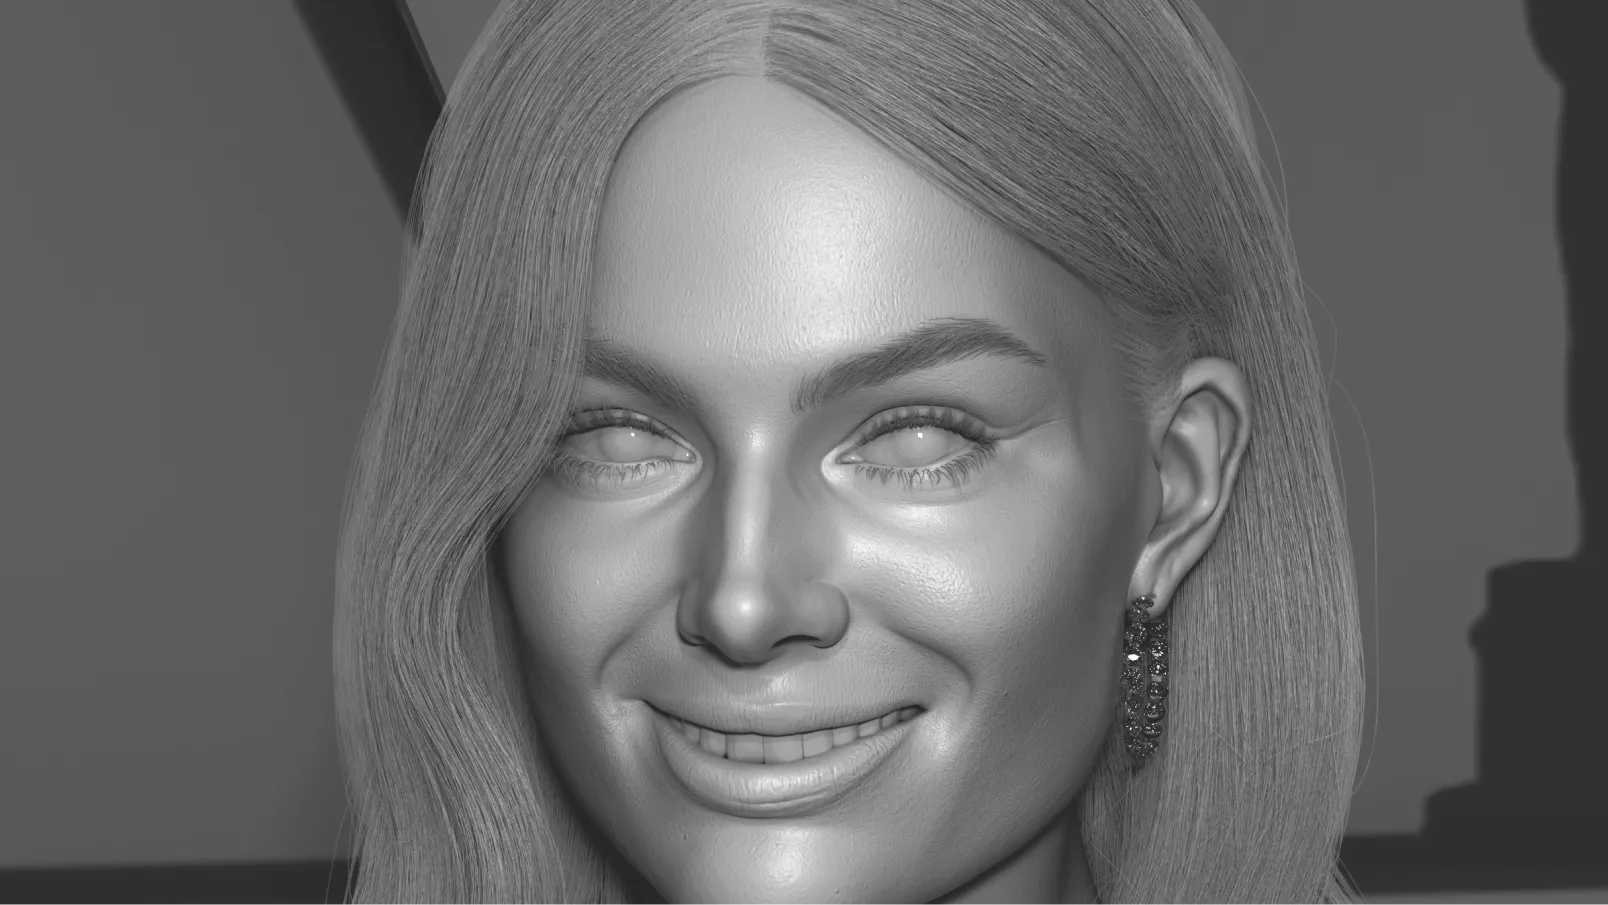 That job-winning render of Margot Robbie